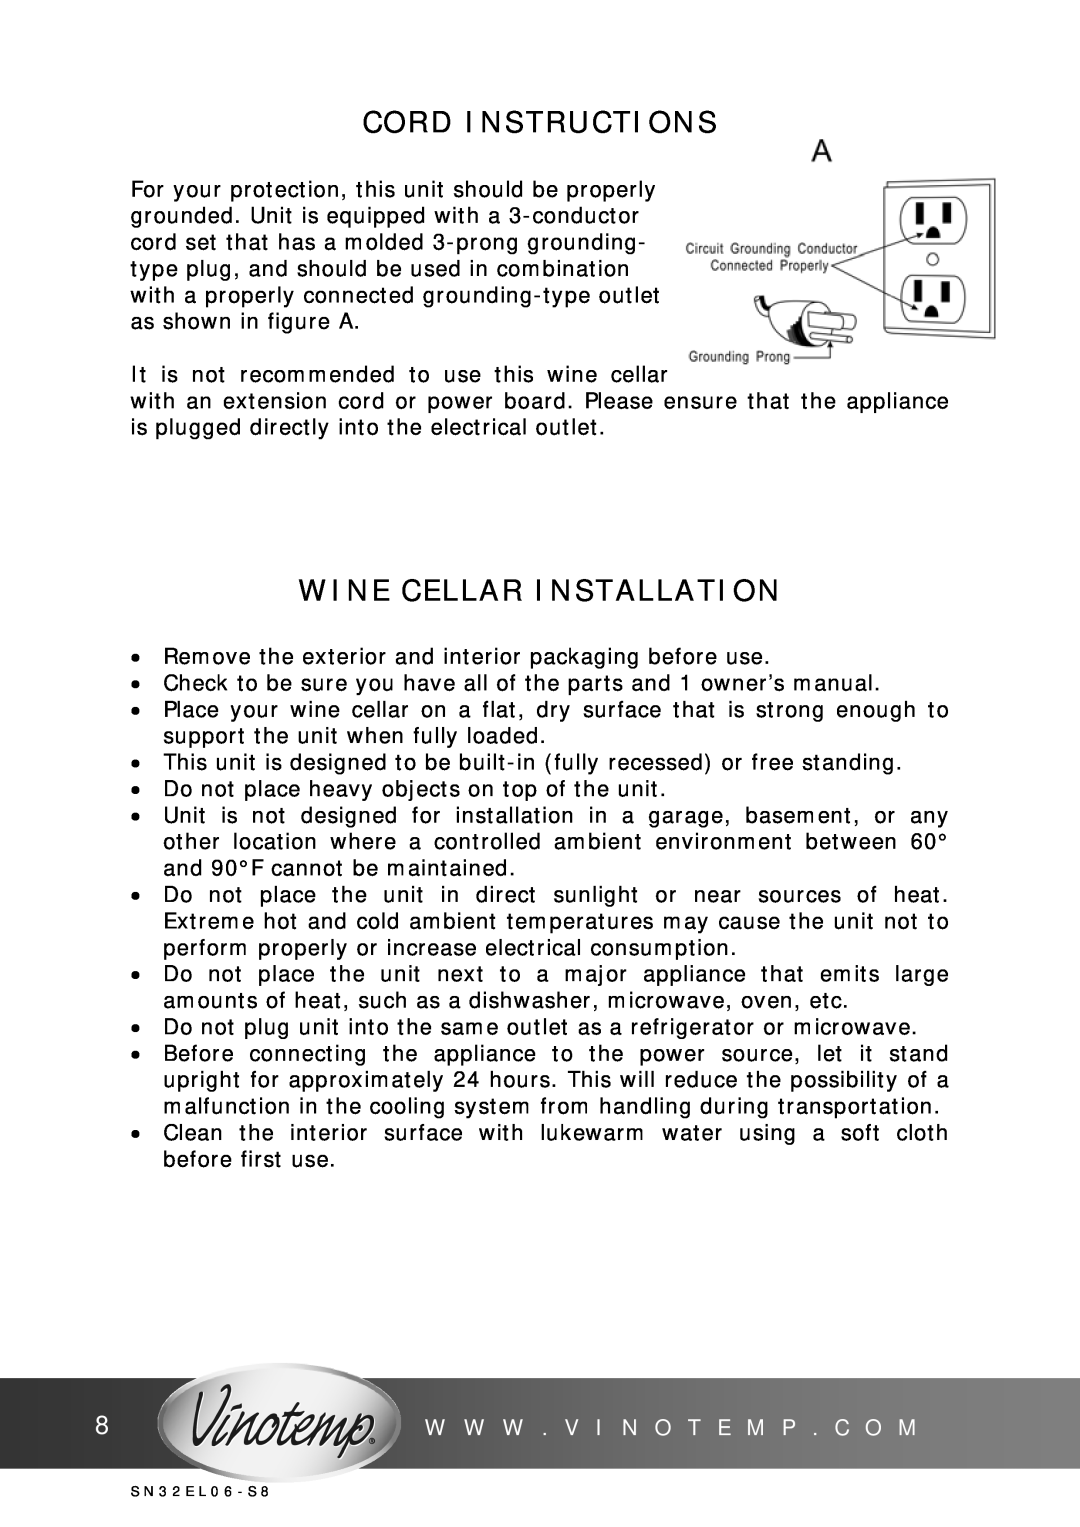 Vinotemp VT-32G, VT-32SN owner manual Cord Instructions, Wine Cellar Installation, W W W . V I N O T E M P . C O M 